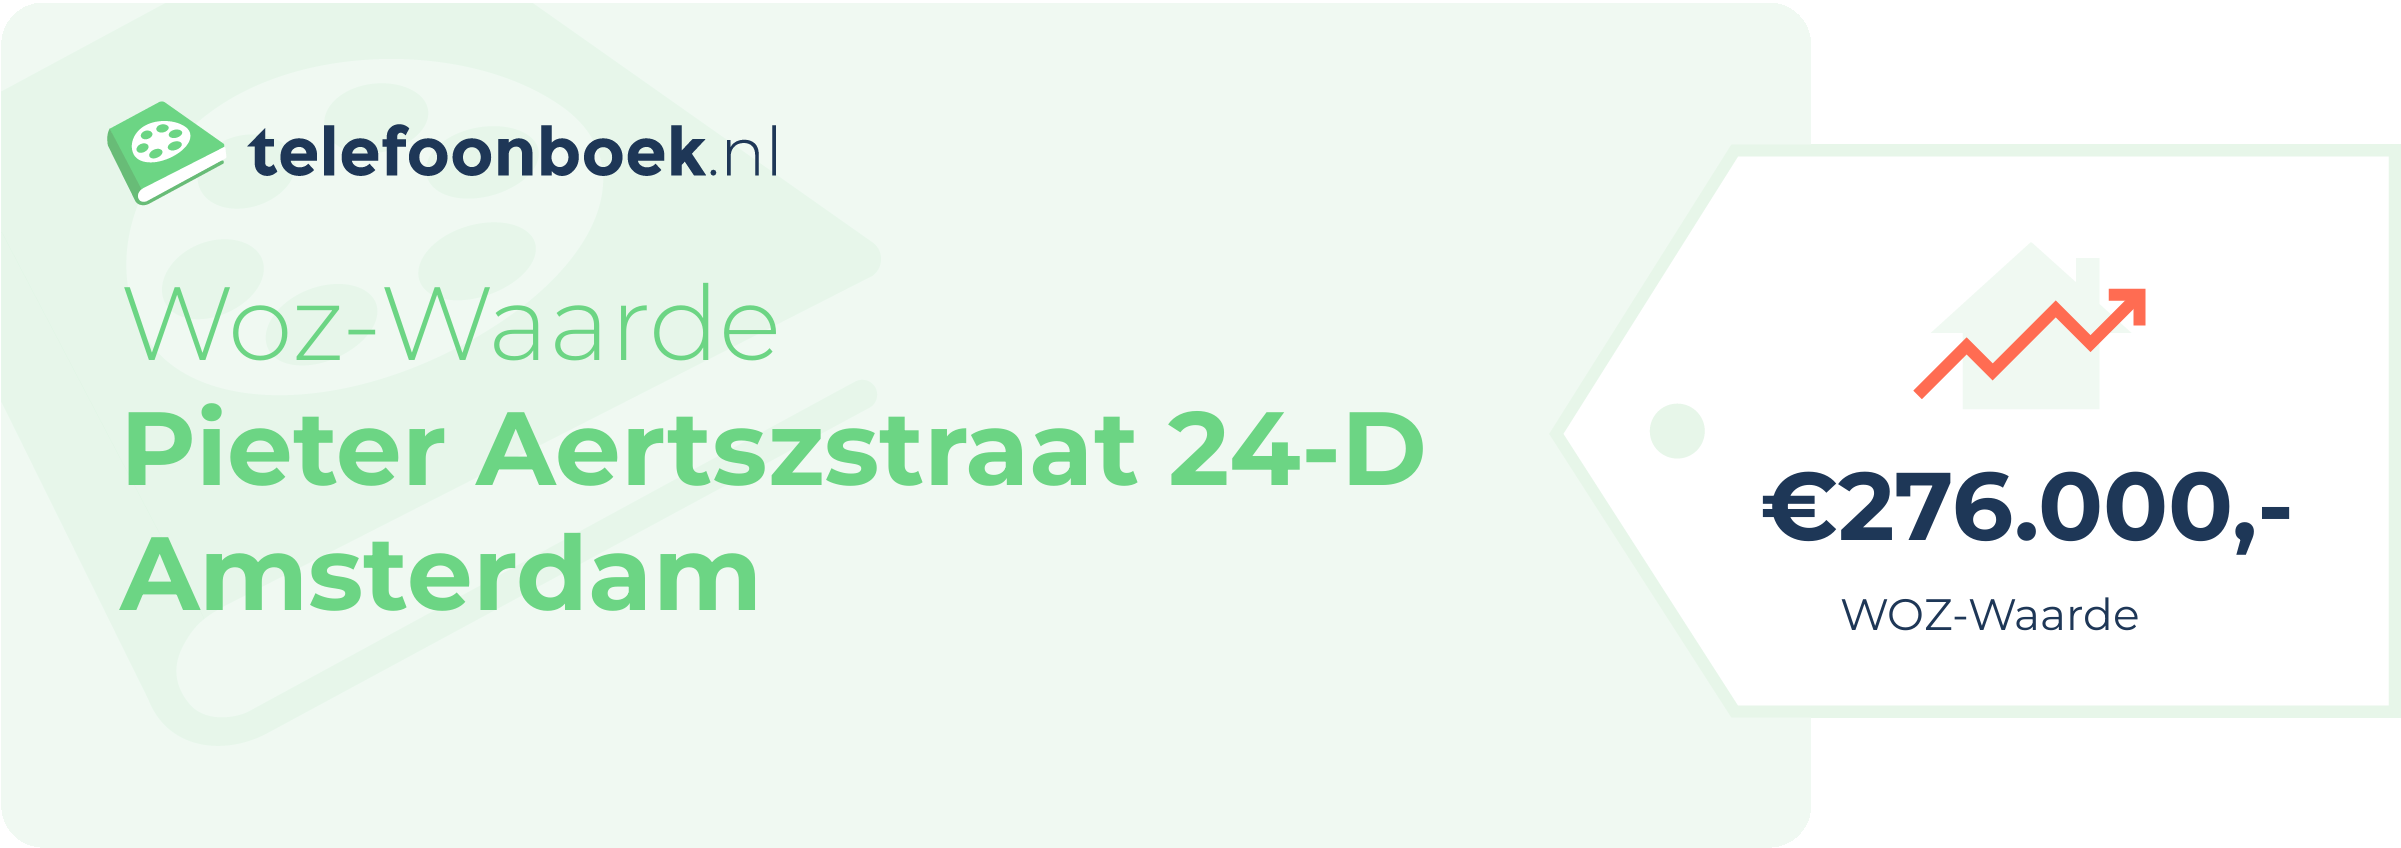 WOZ-waarde Pieter Aertszstraat 24-D Amsterdam